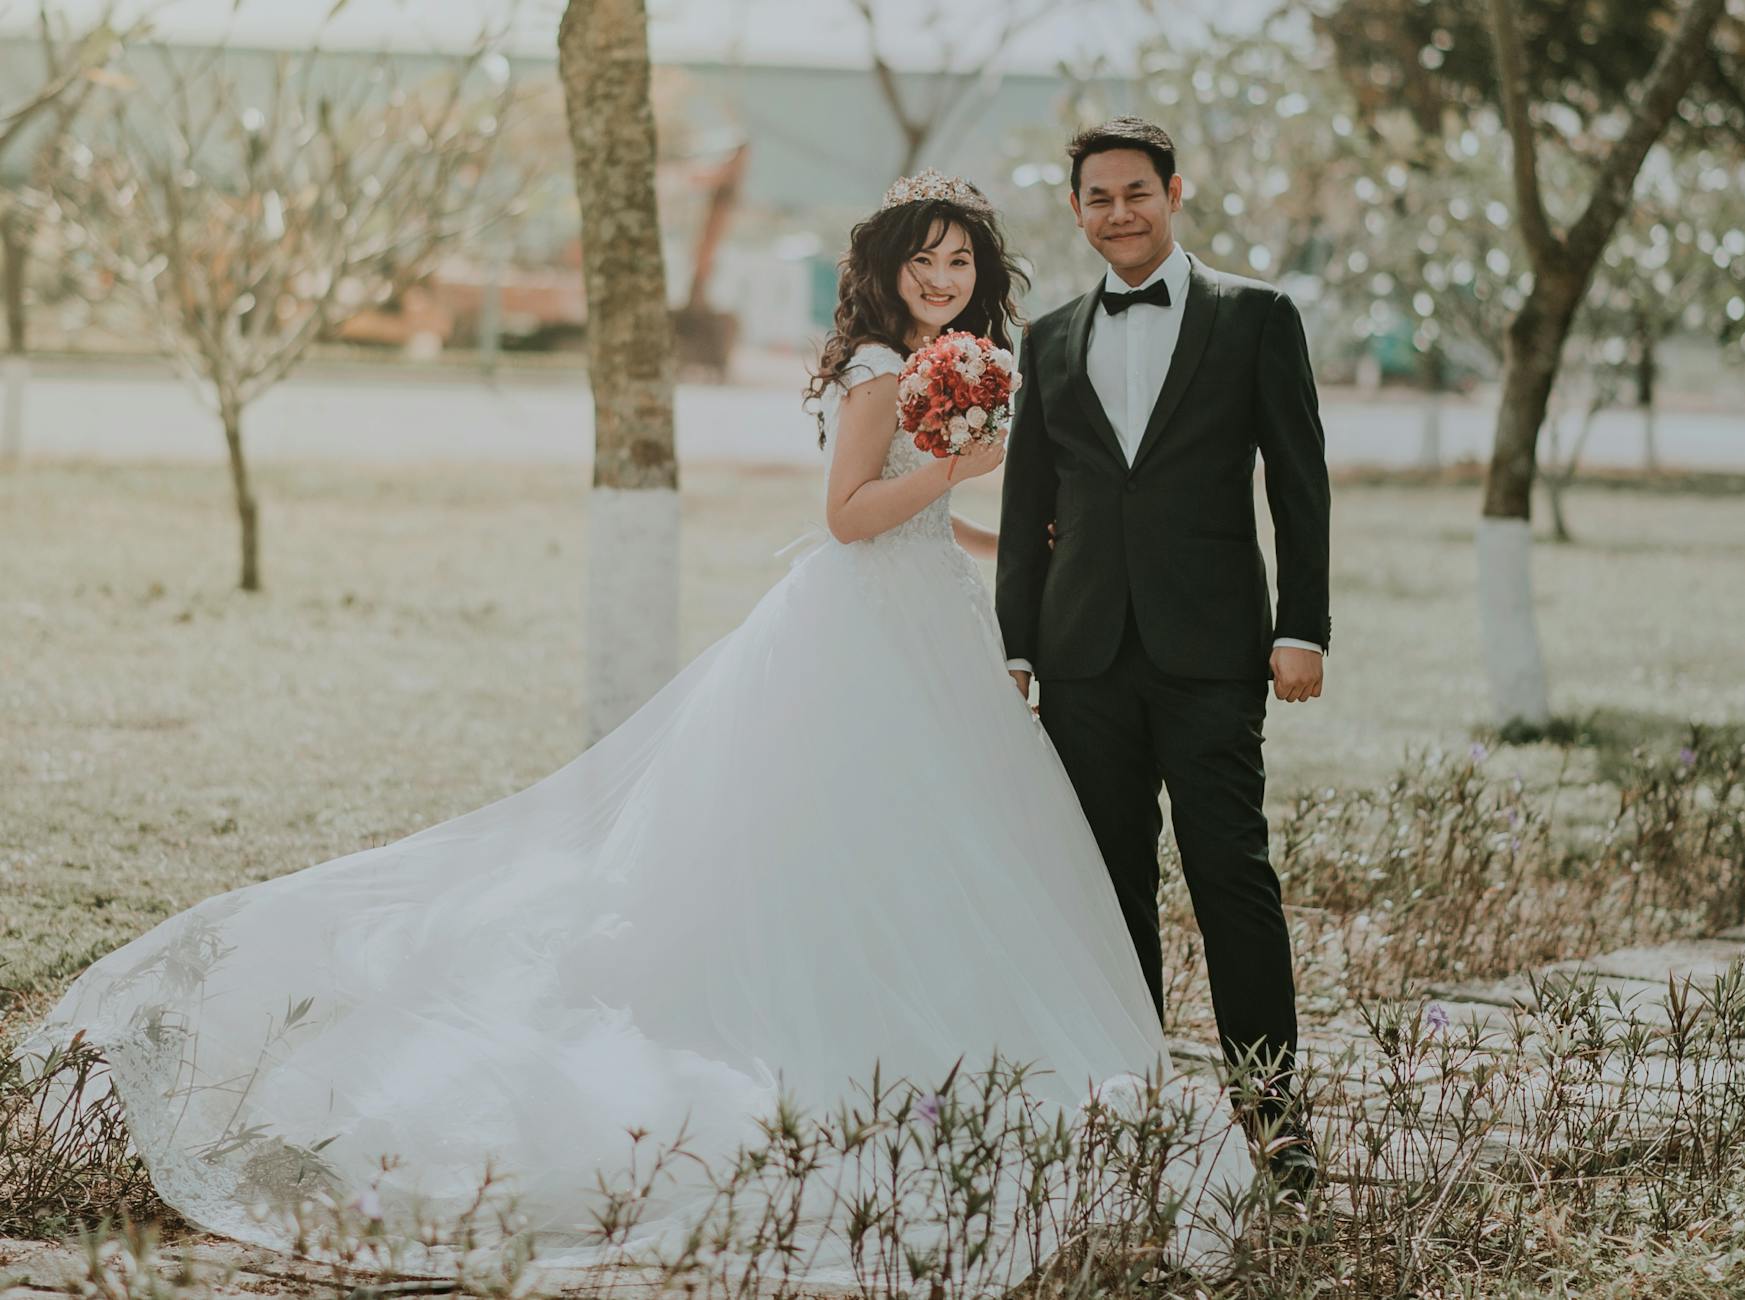 woman wearing white wedding ball beside man wearing black notch lapel suit on pathway near the green grass field